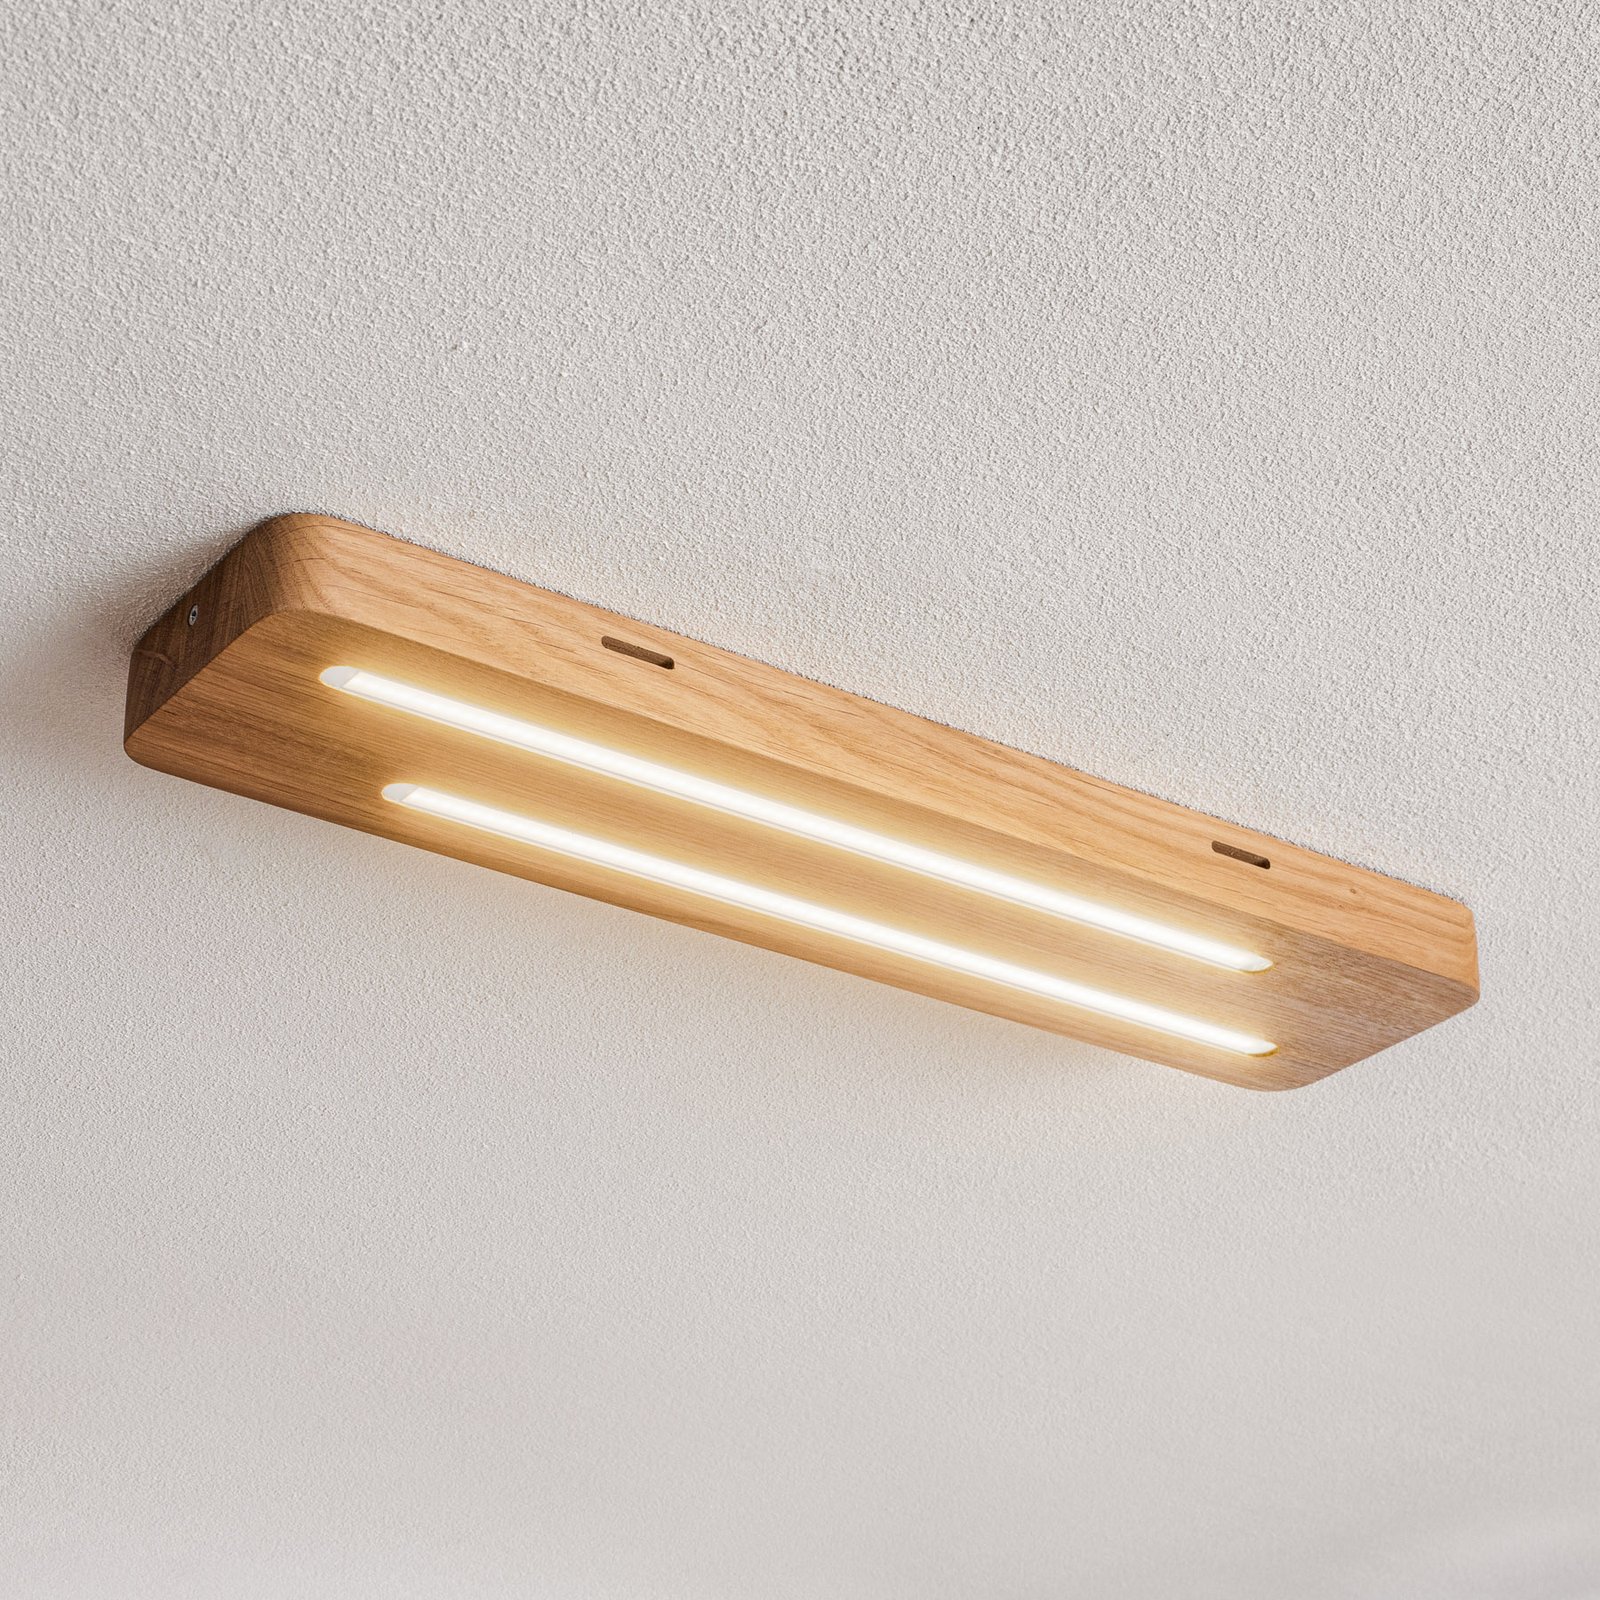 Plafonnier LED Plafond Holz, bois de chêne